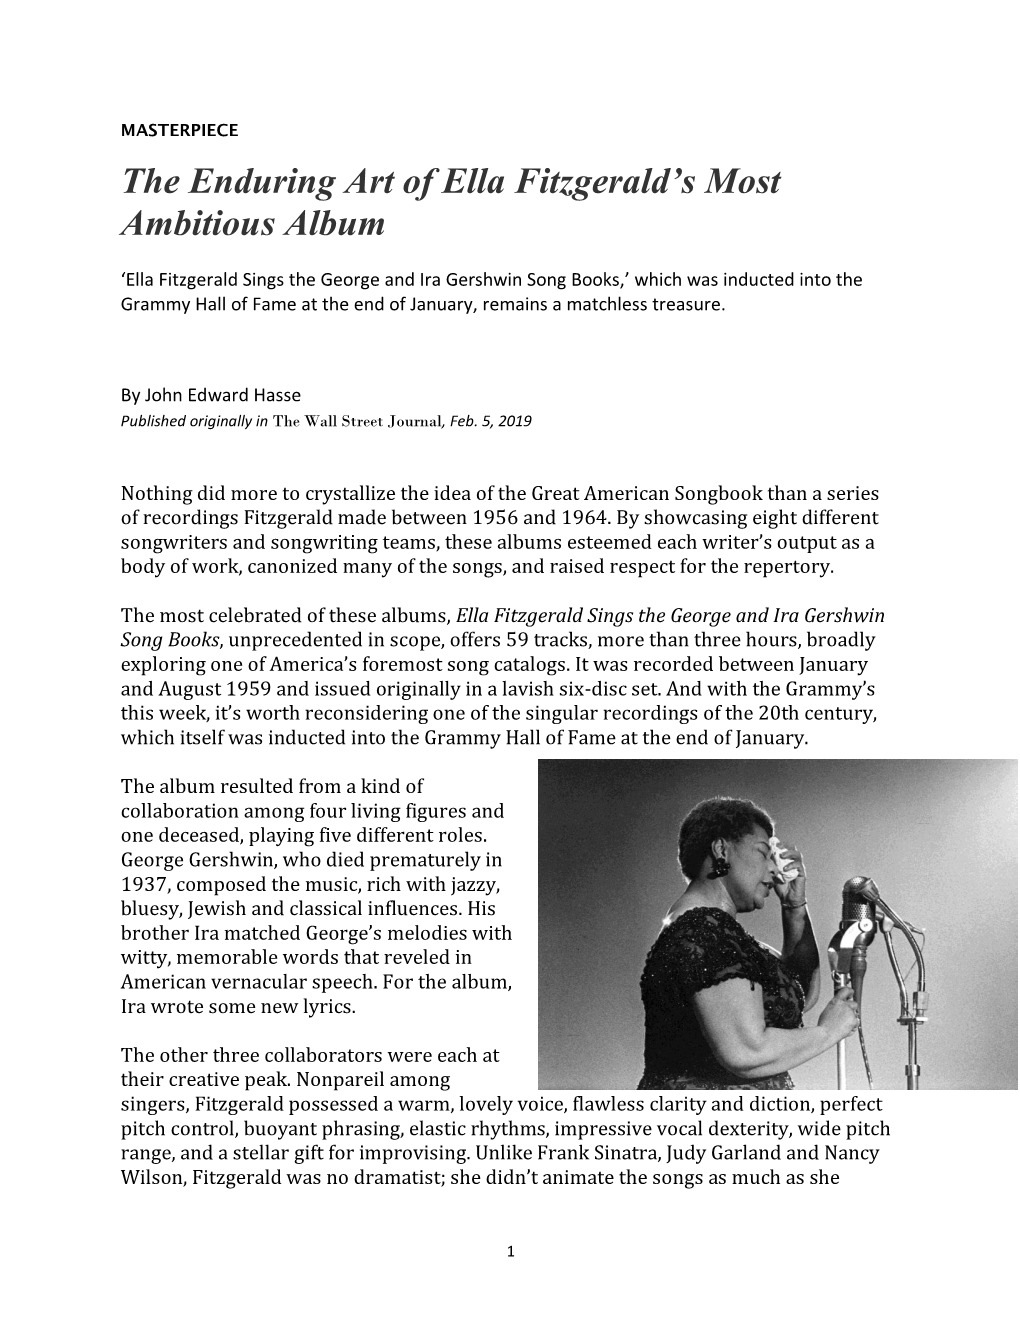 The Enduring Art of Ella Fitzgerald's Most Ambitious Album